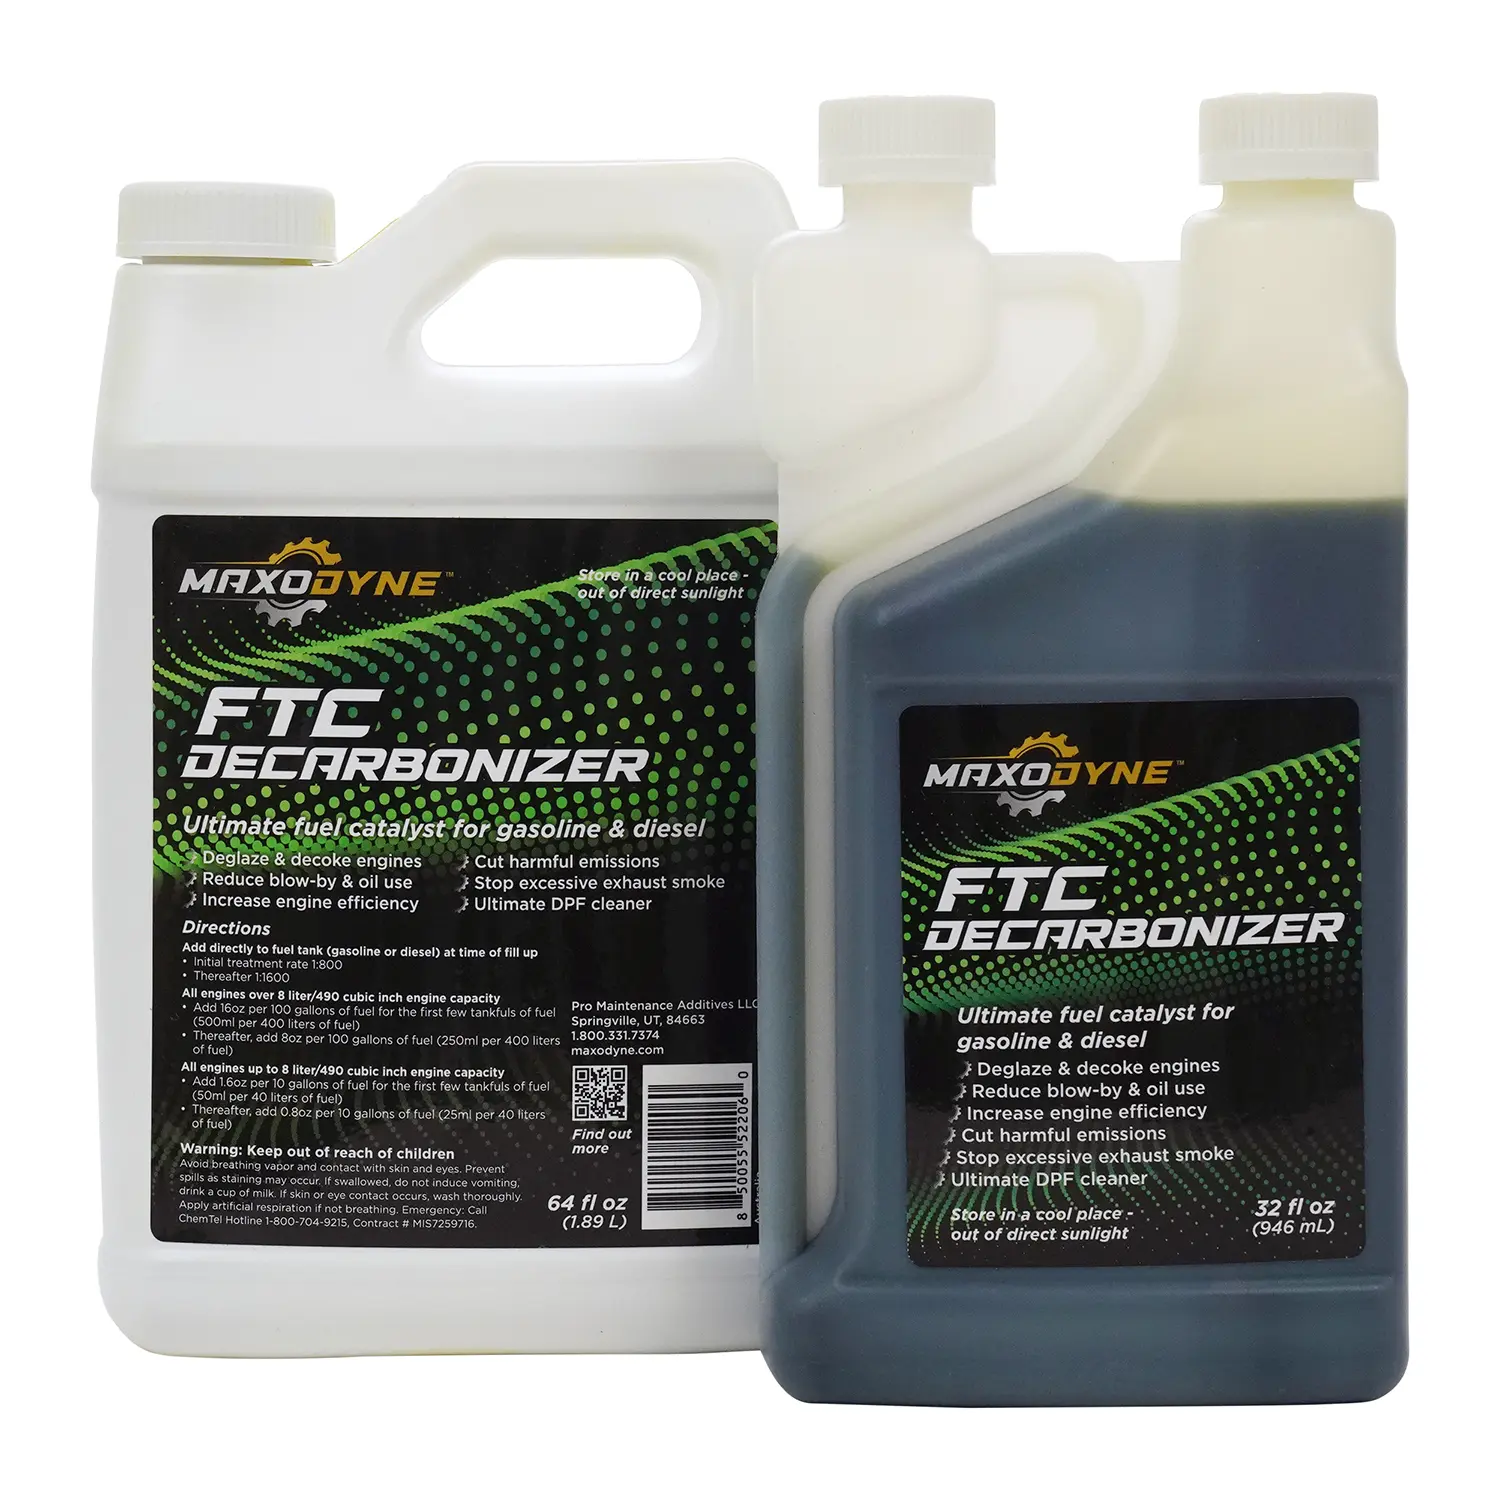 FTC Decarbonizer™ - Pro Maintenance Additives